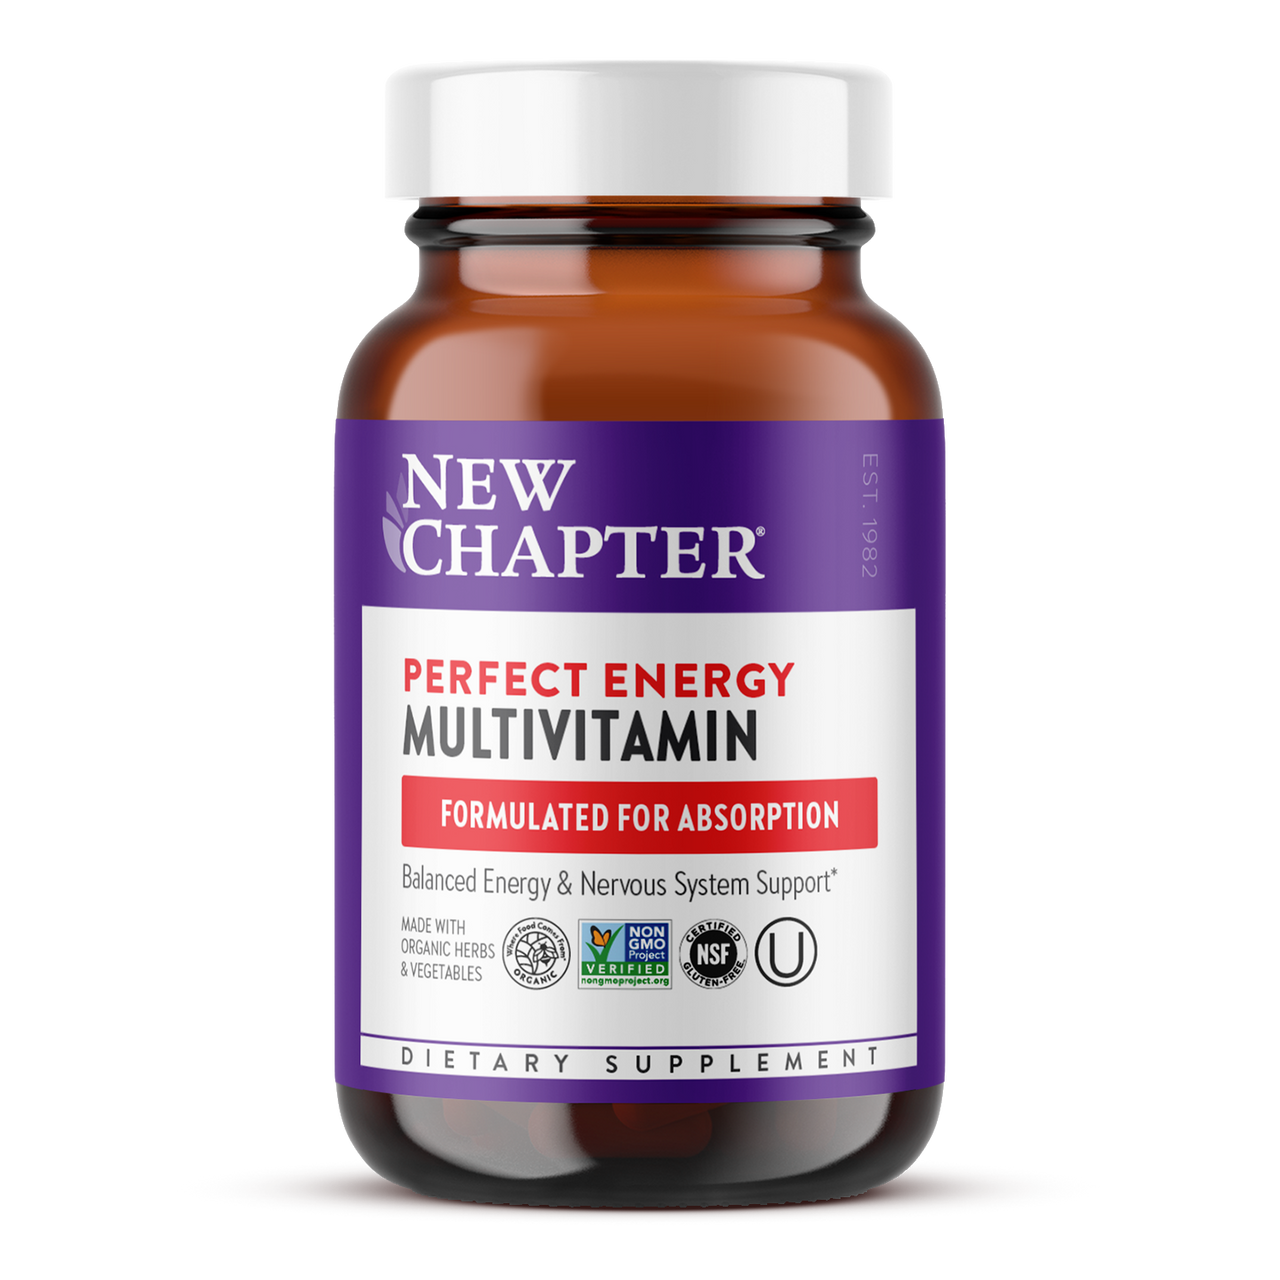 Perfect Energy Multivitamin